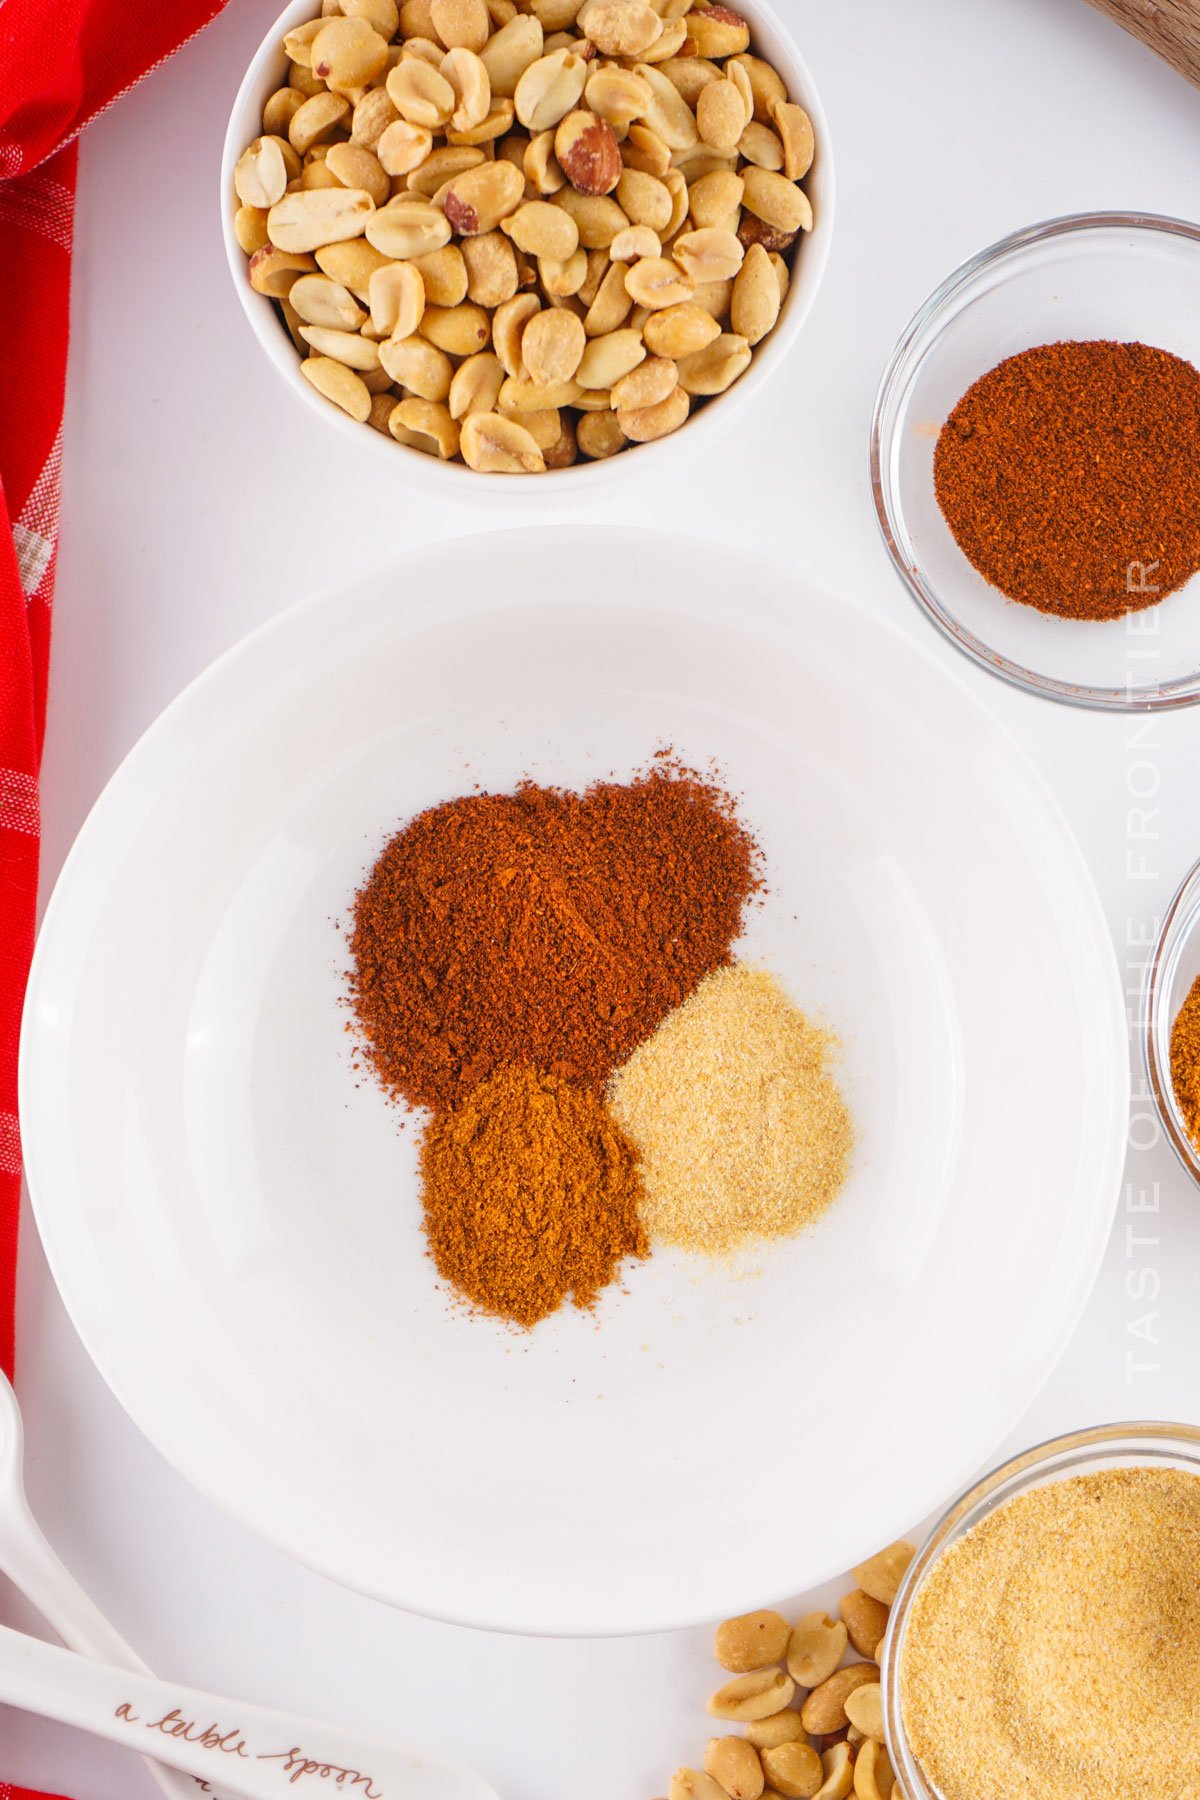 Spicy Peanut ingredients